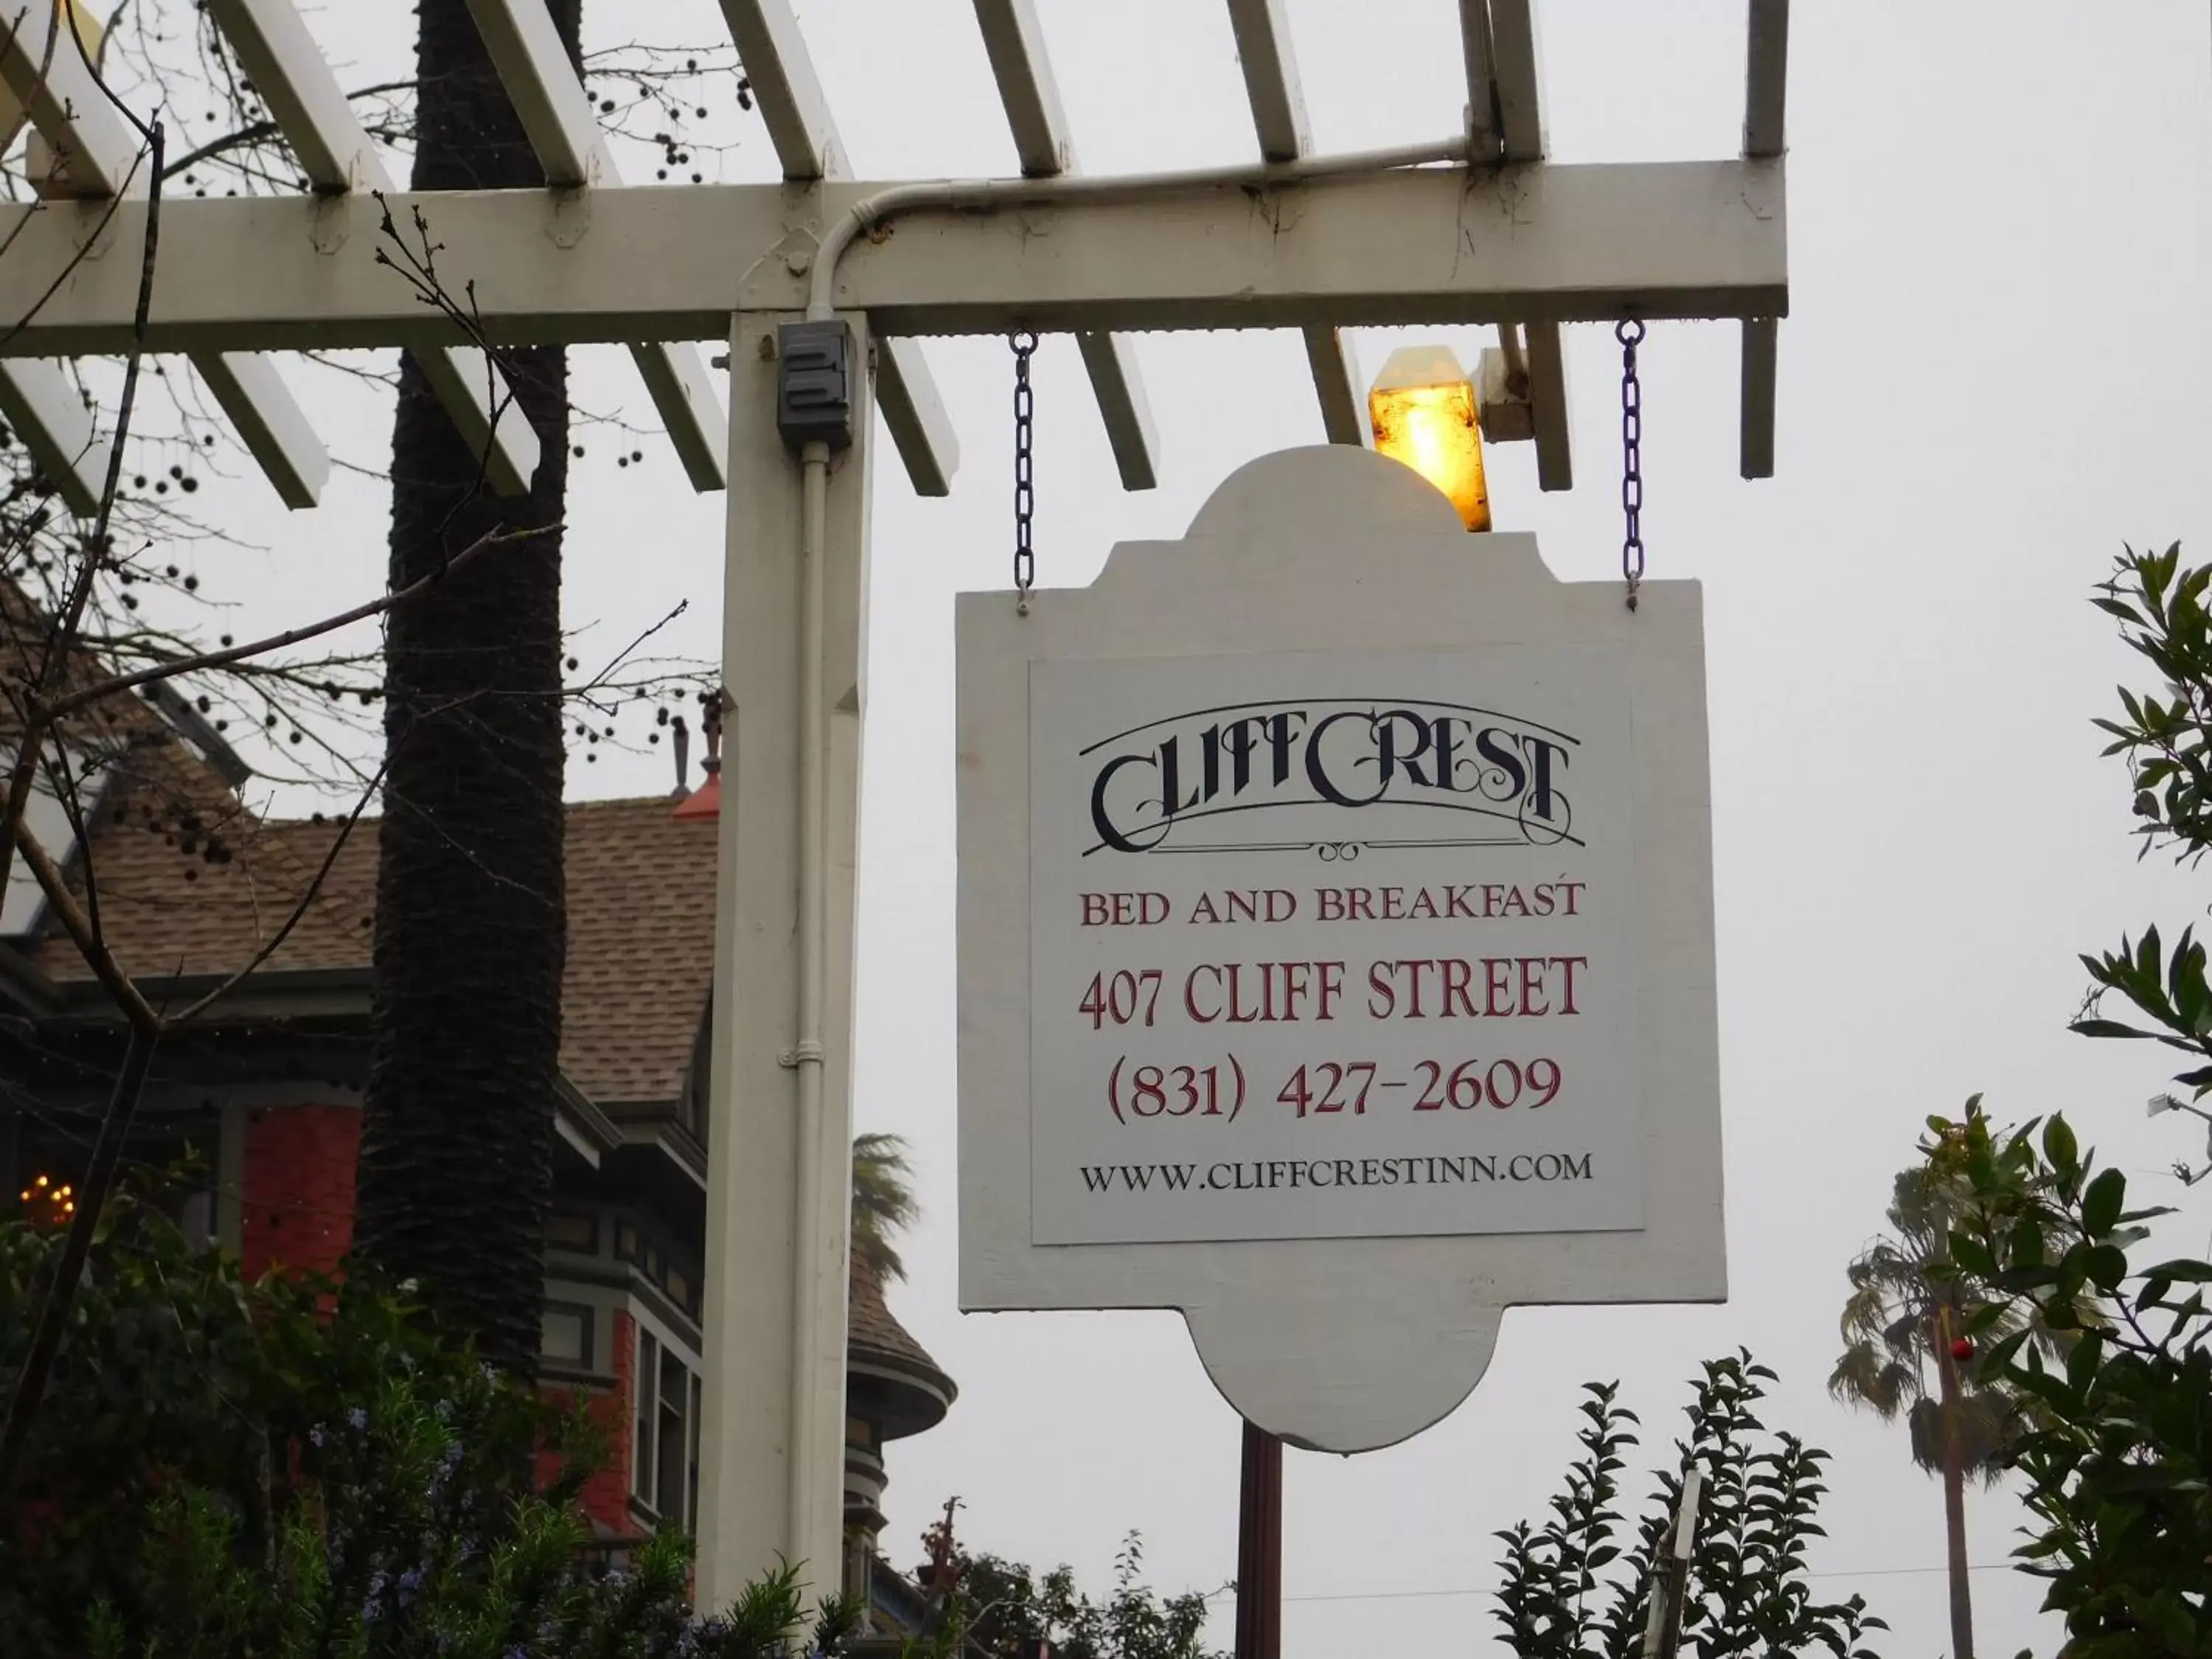 Property logo or sign in Cliff Crest Inn